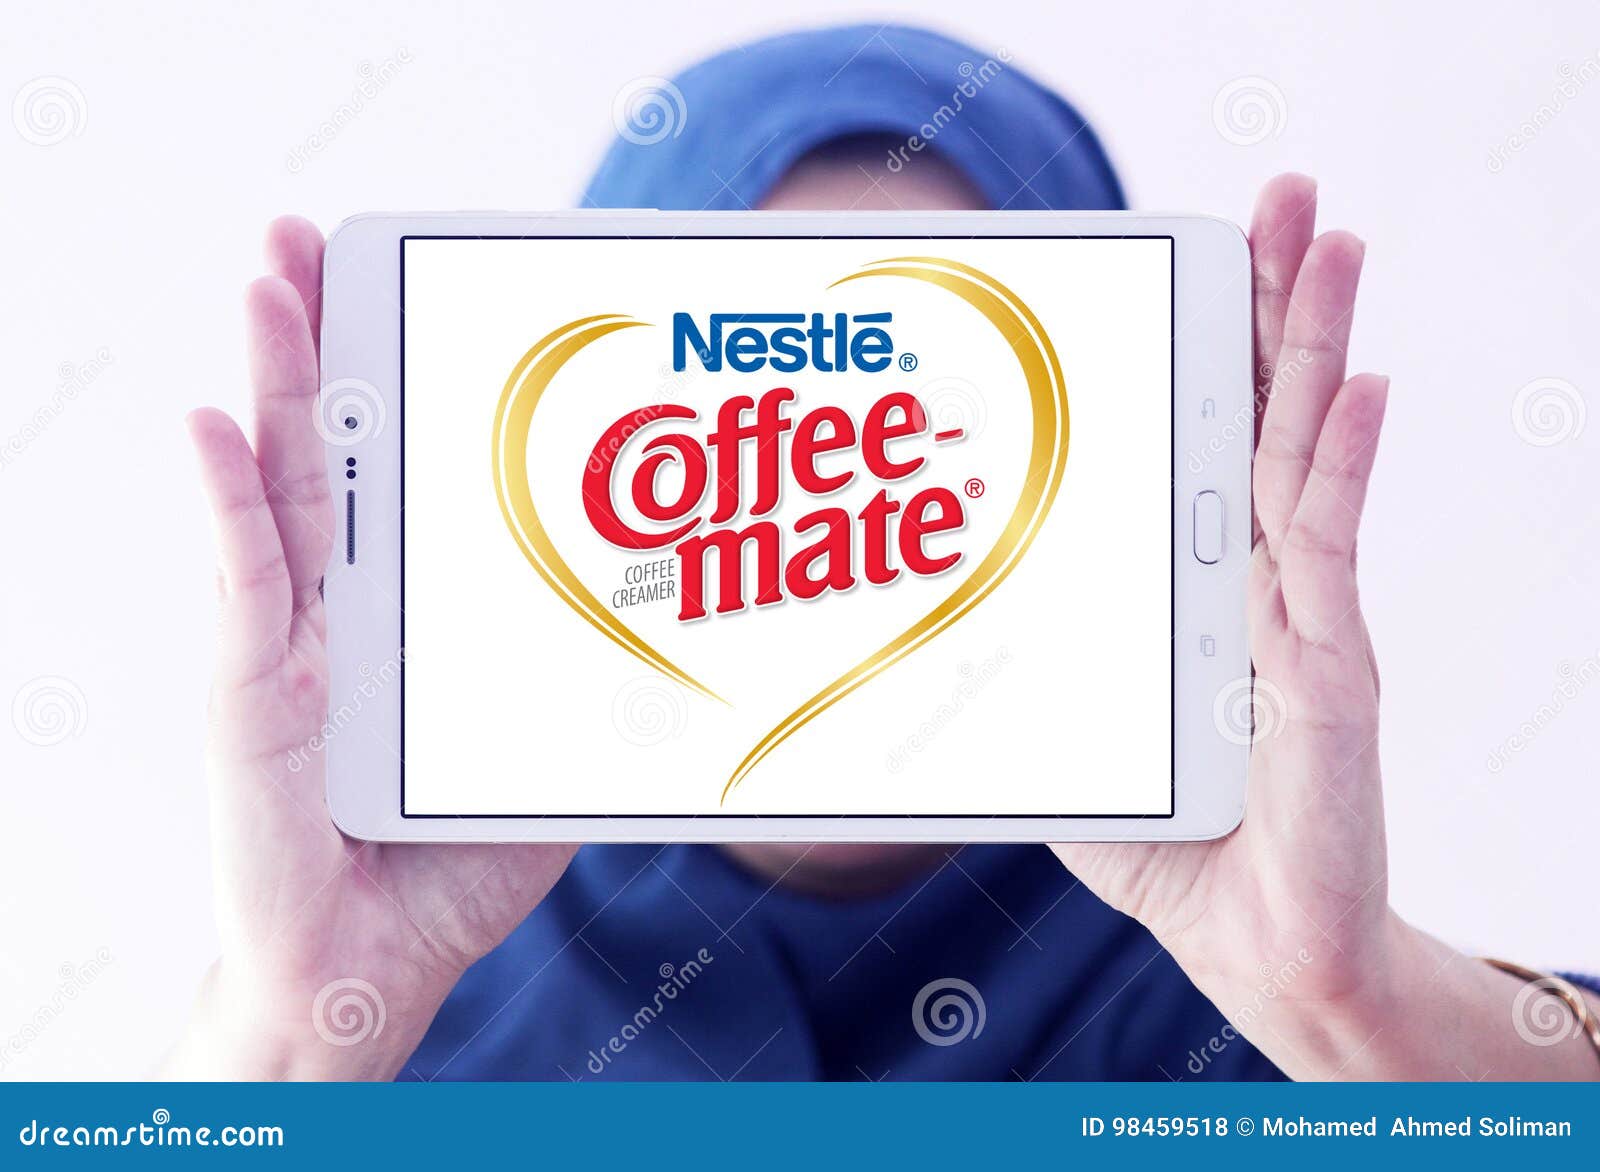 Nestle coffee mate logo editorial stock photo. Image of dunkin - 98459518